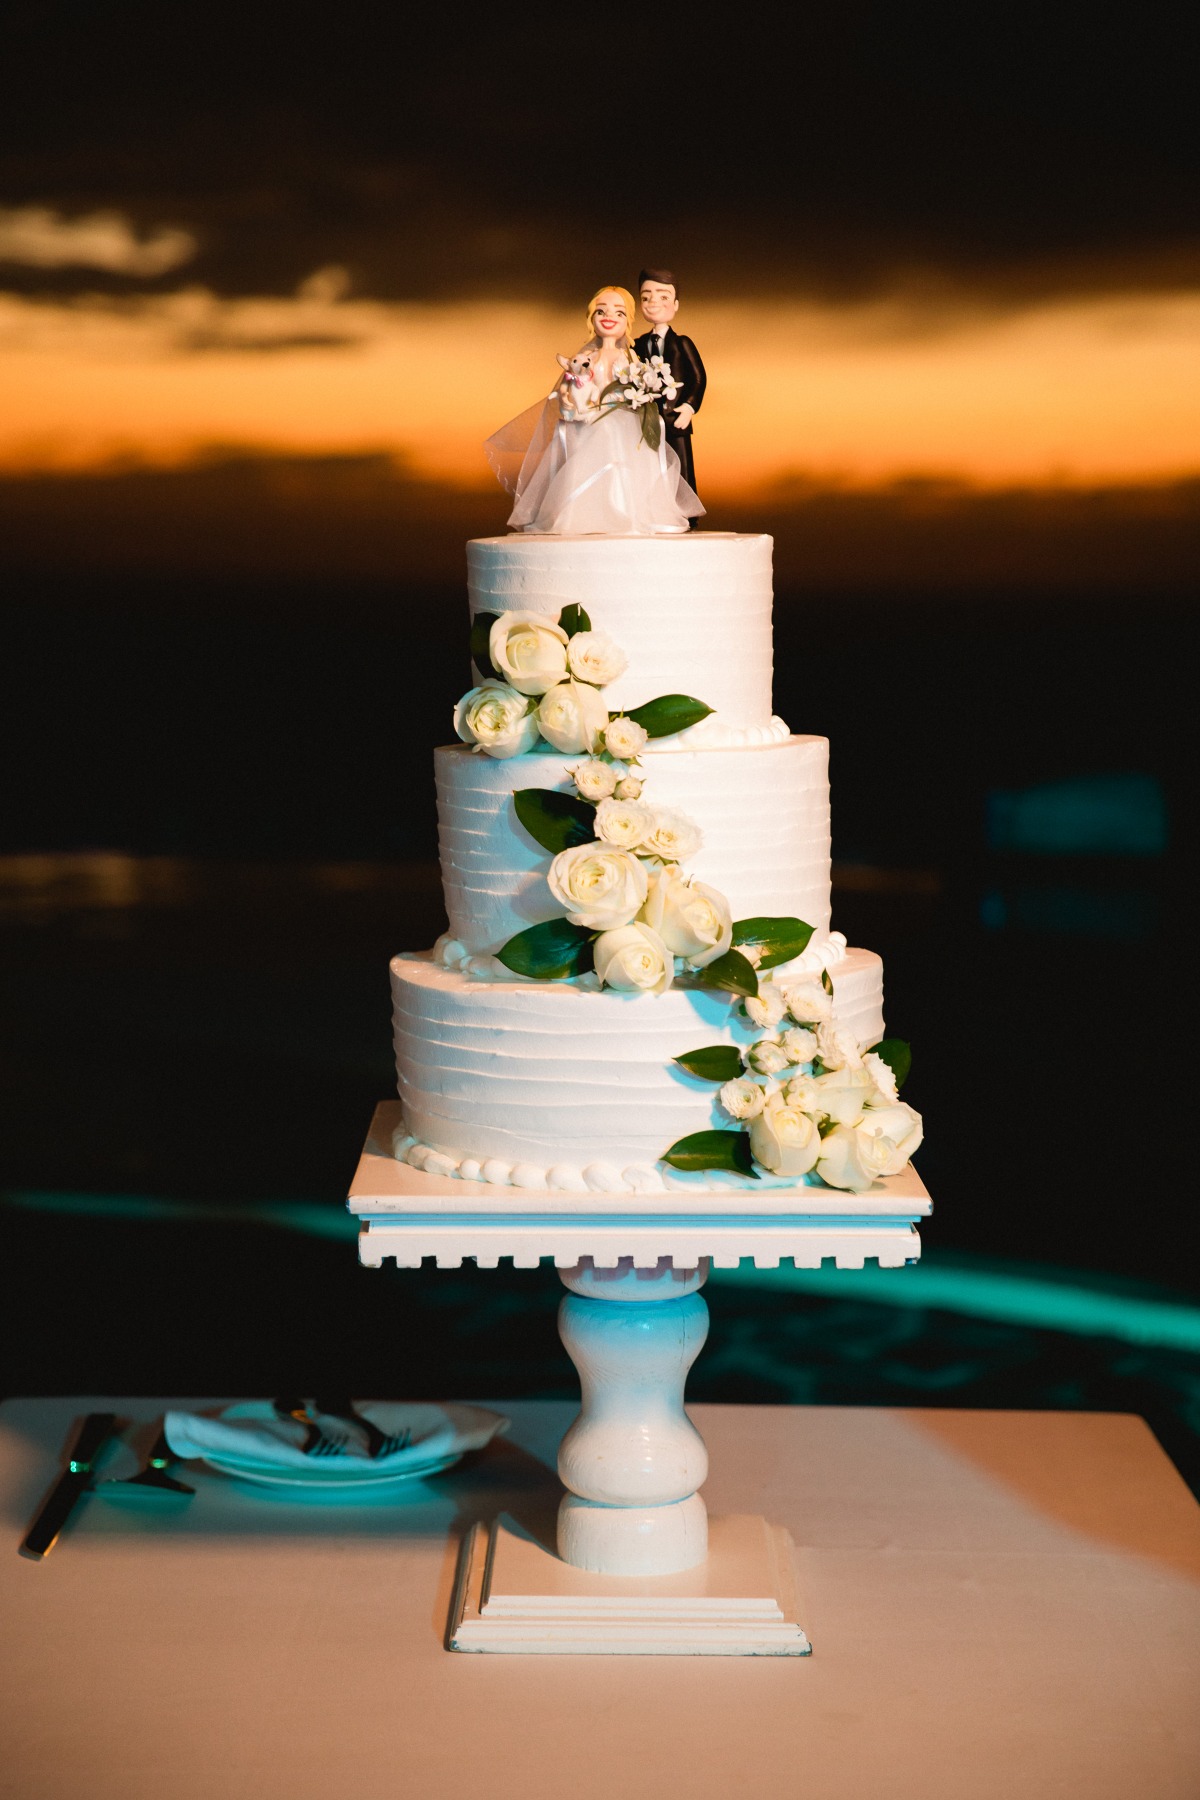 White wedding cake with roses